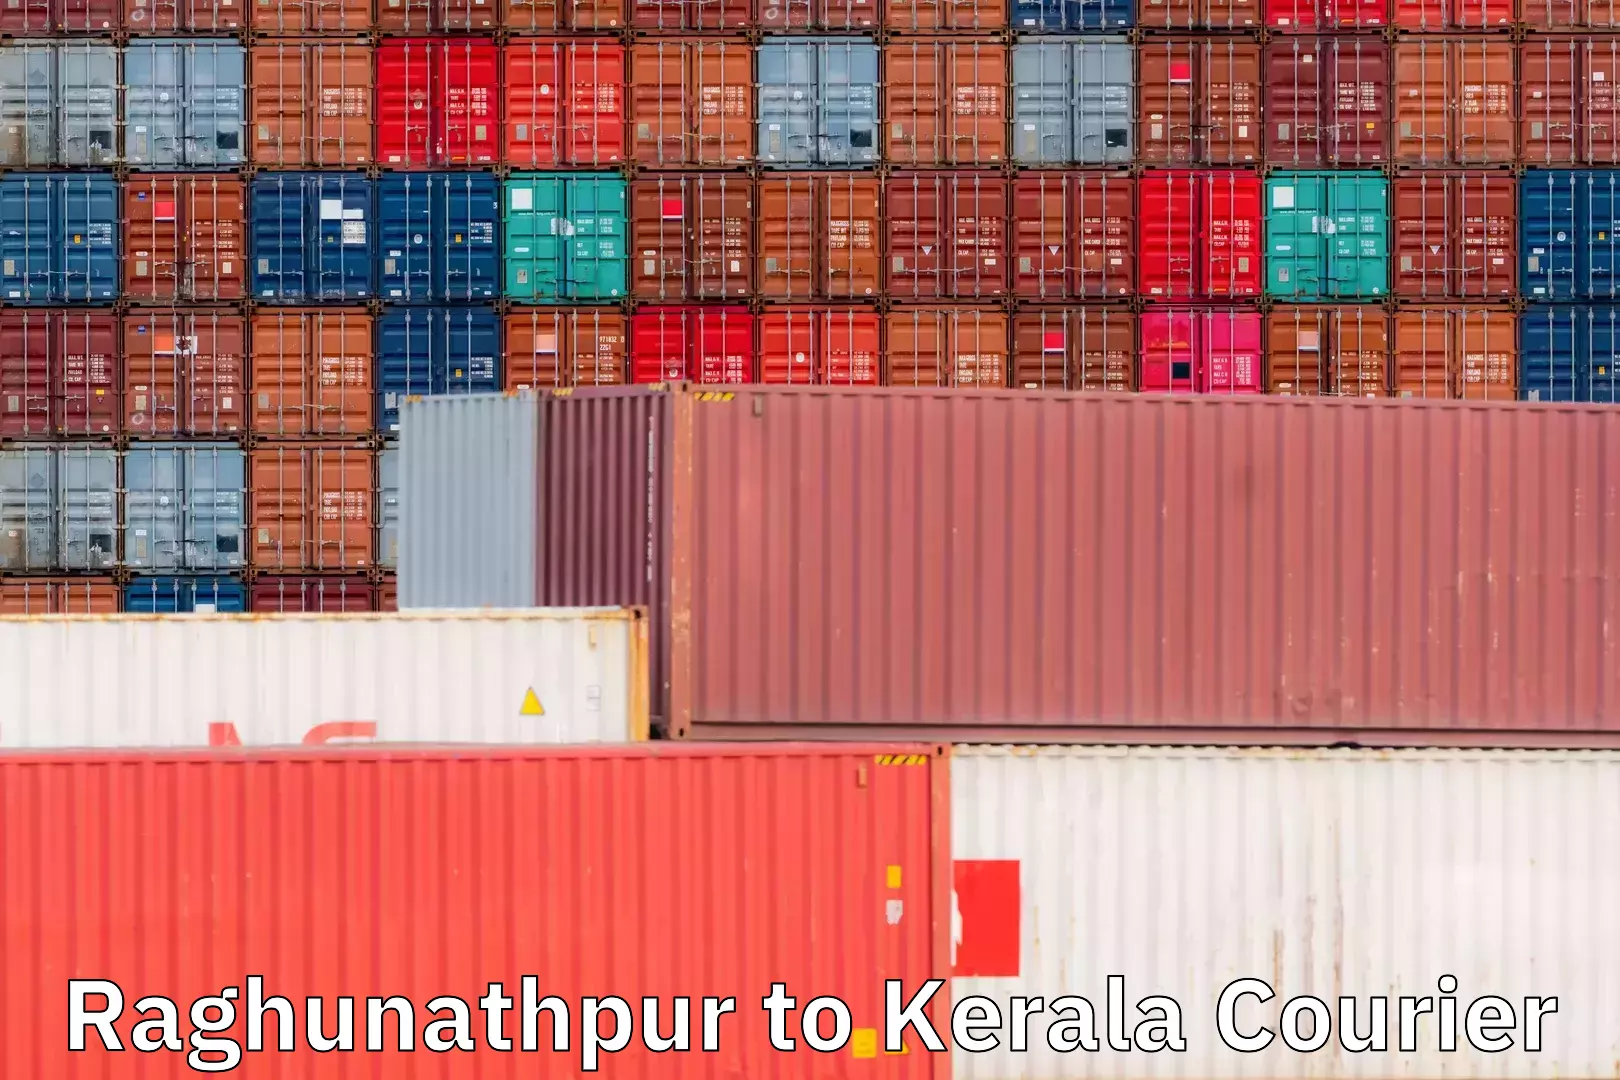 Courier service comparison Raghunathpur to Kerala